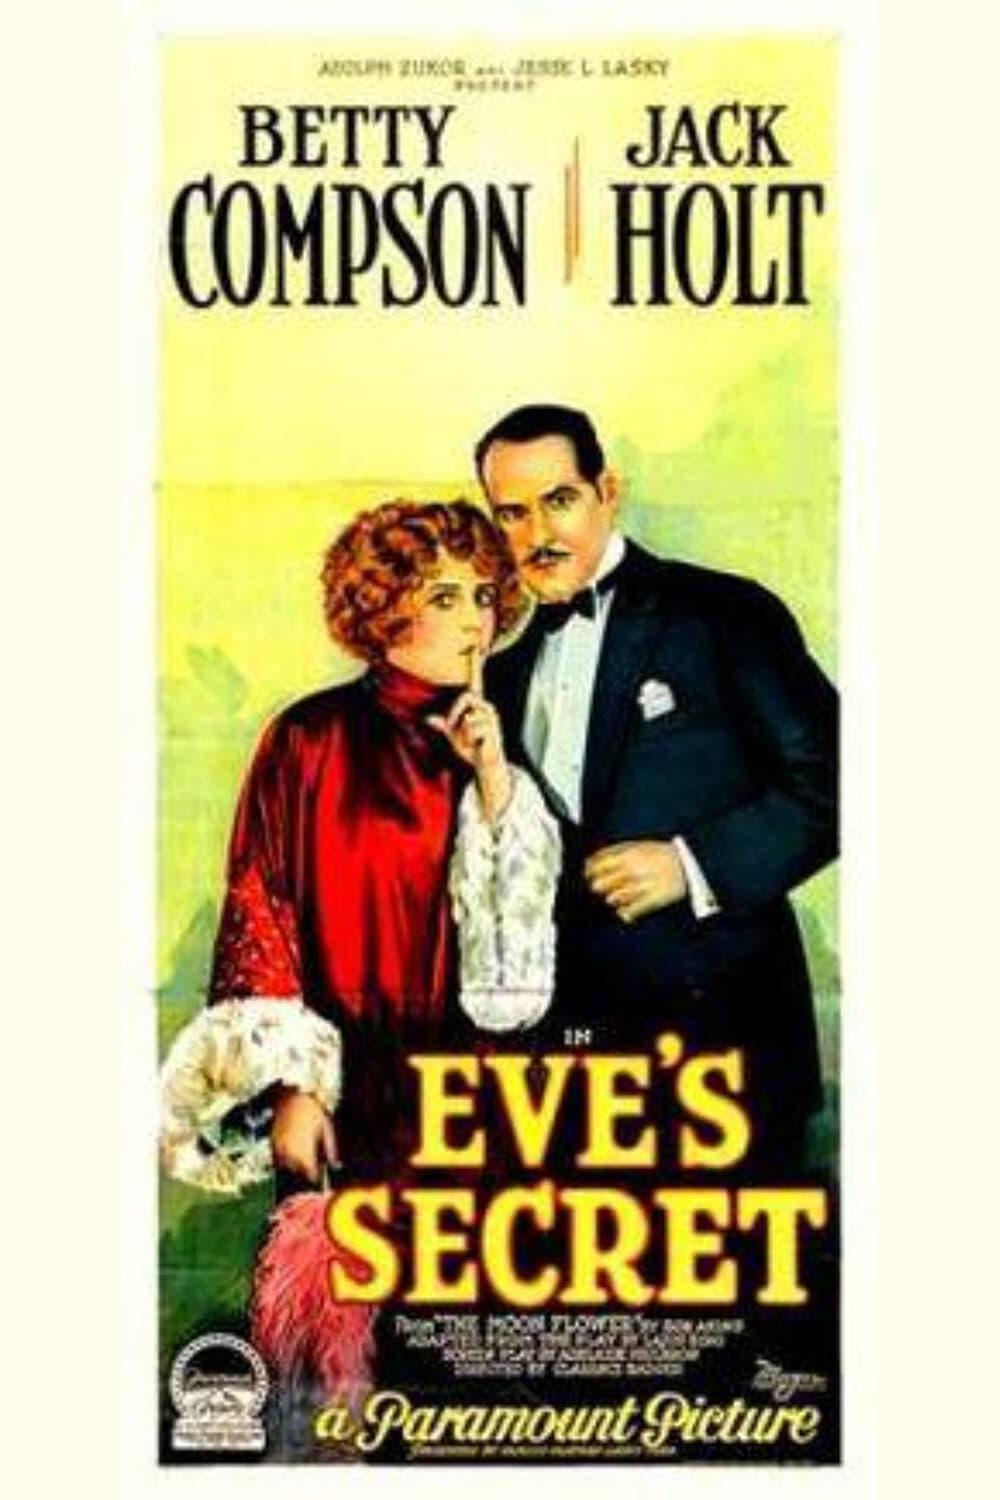 Eve's Secret poster